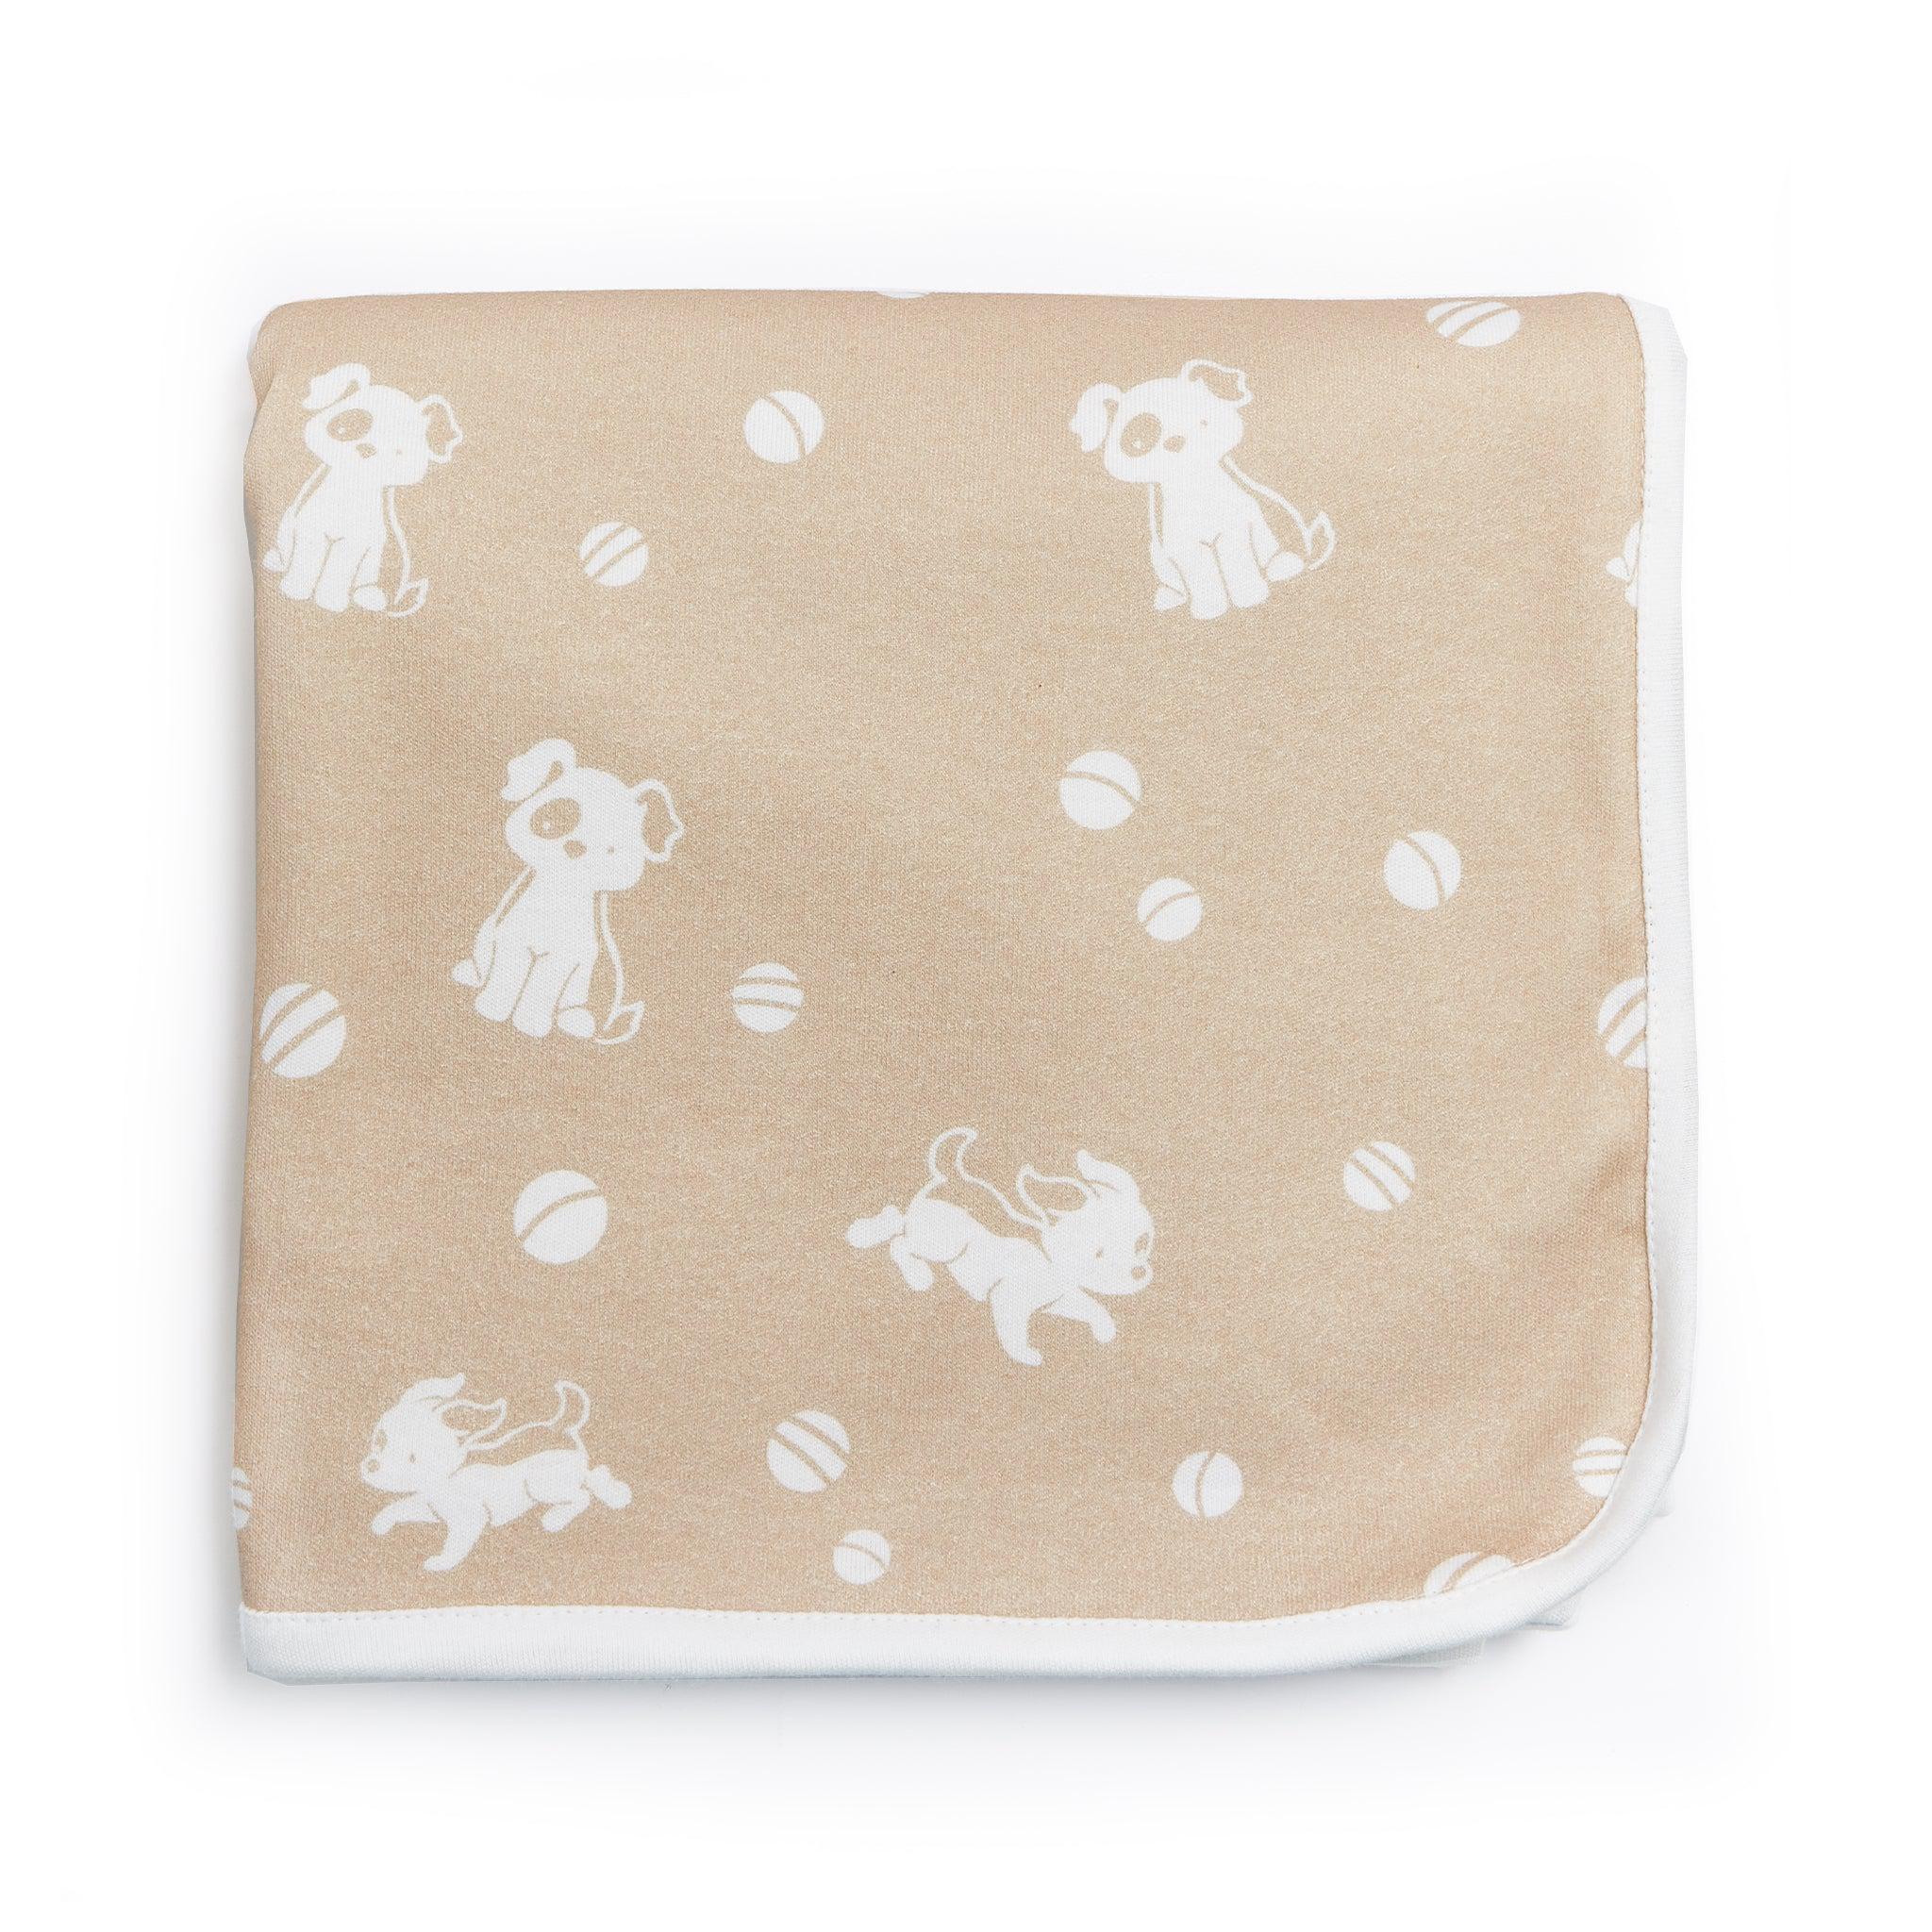 Fox Blanket, Customized Baby Blanket for Little Girl, Gifts for